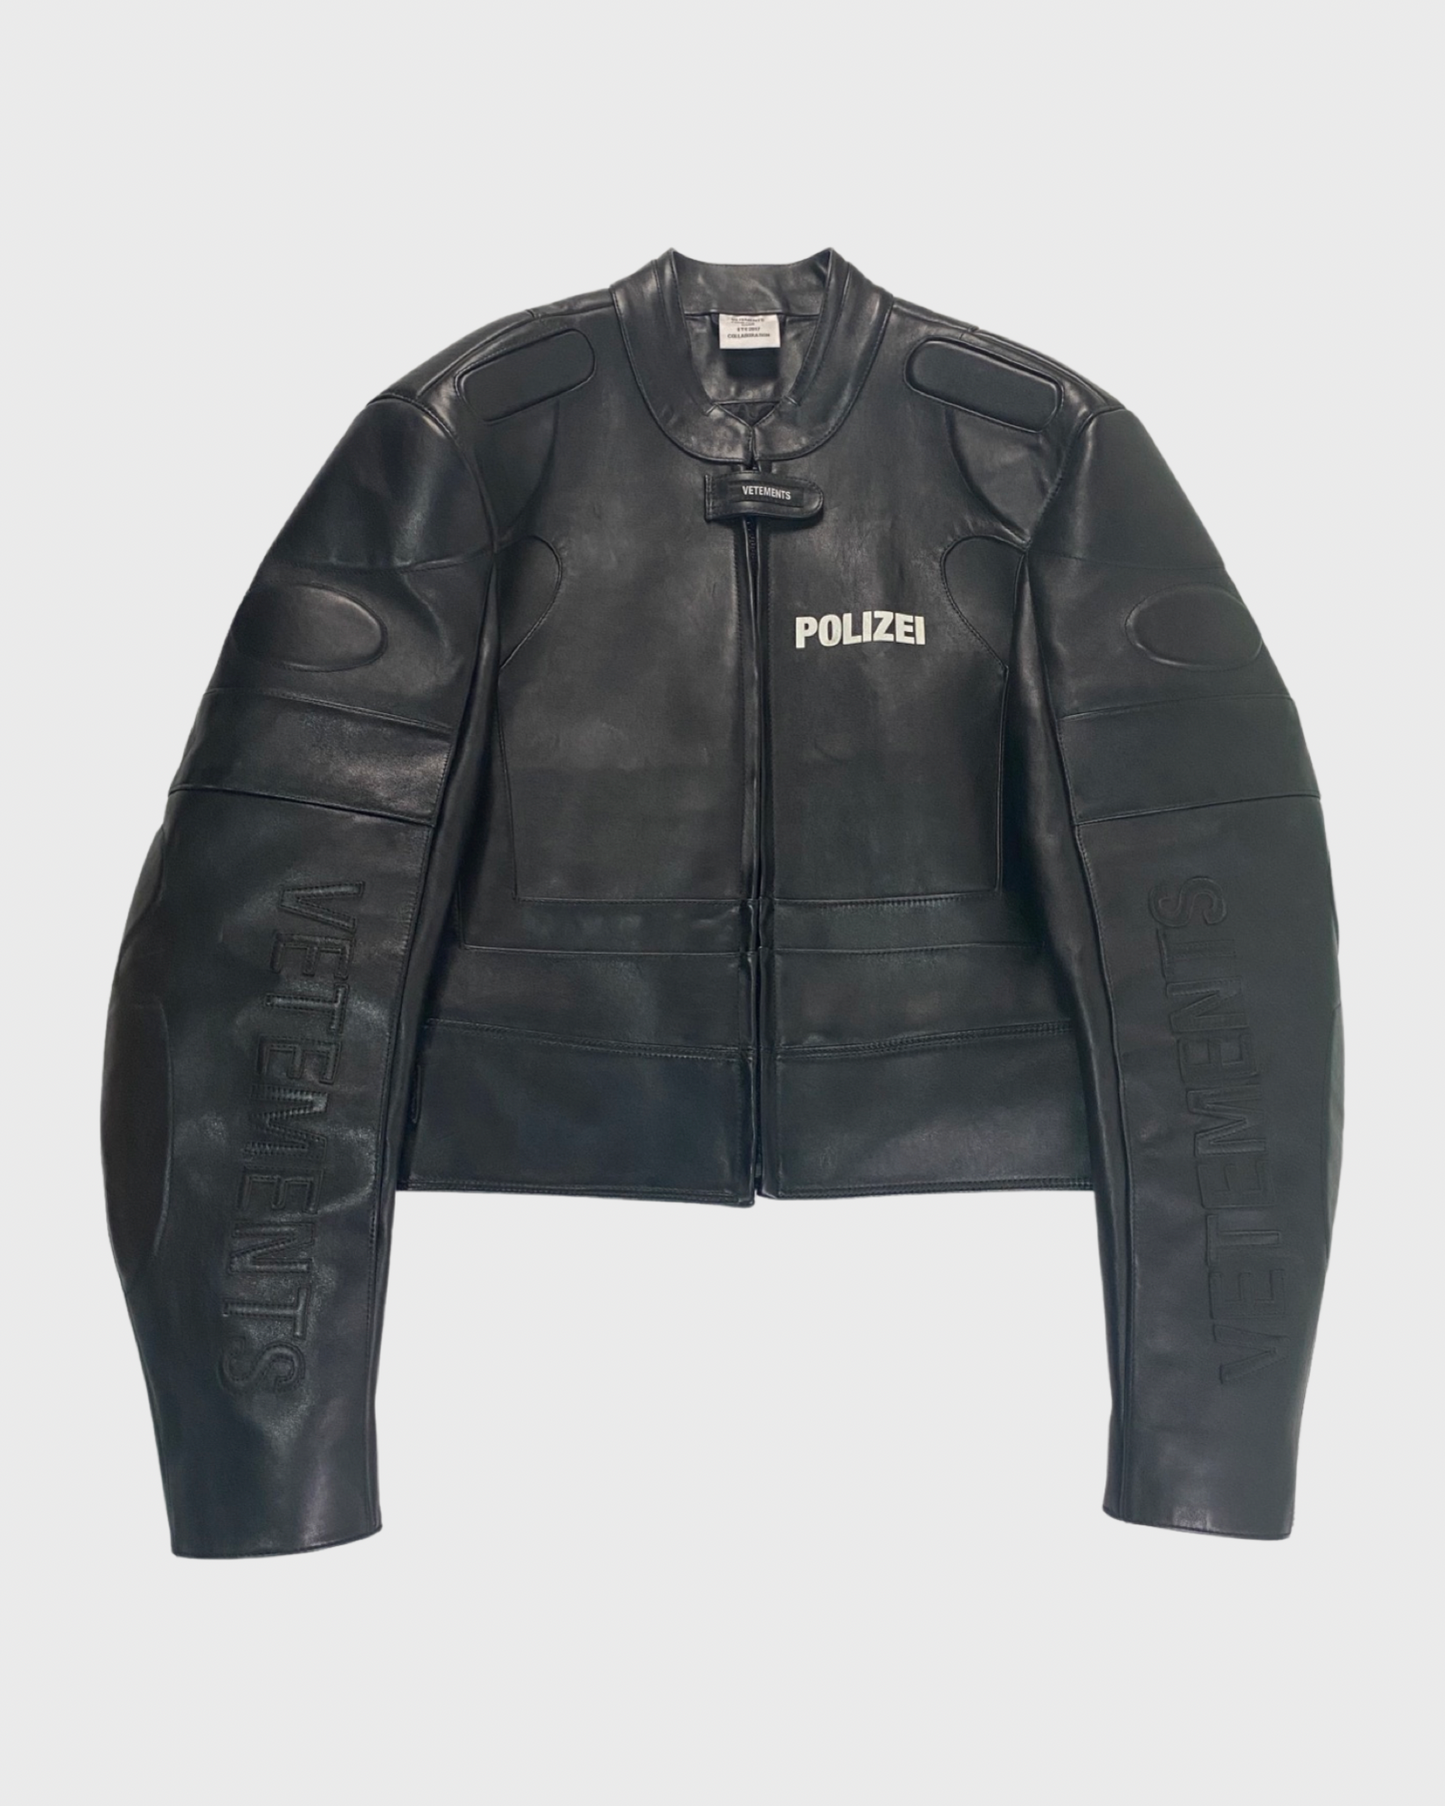 Vetements SS17 runway Polizei moto racing leather jacket in black SZ:L